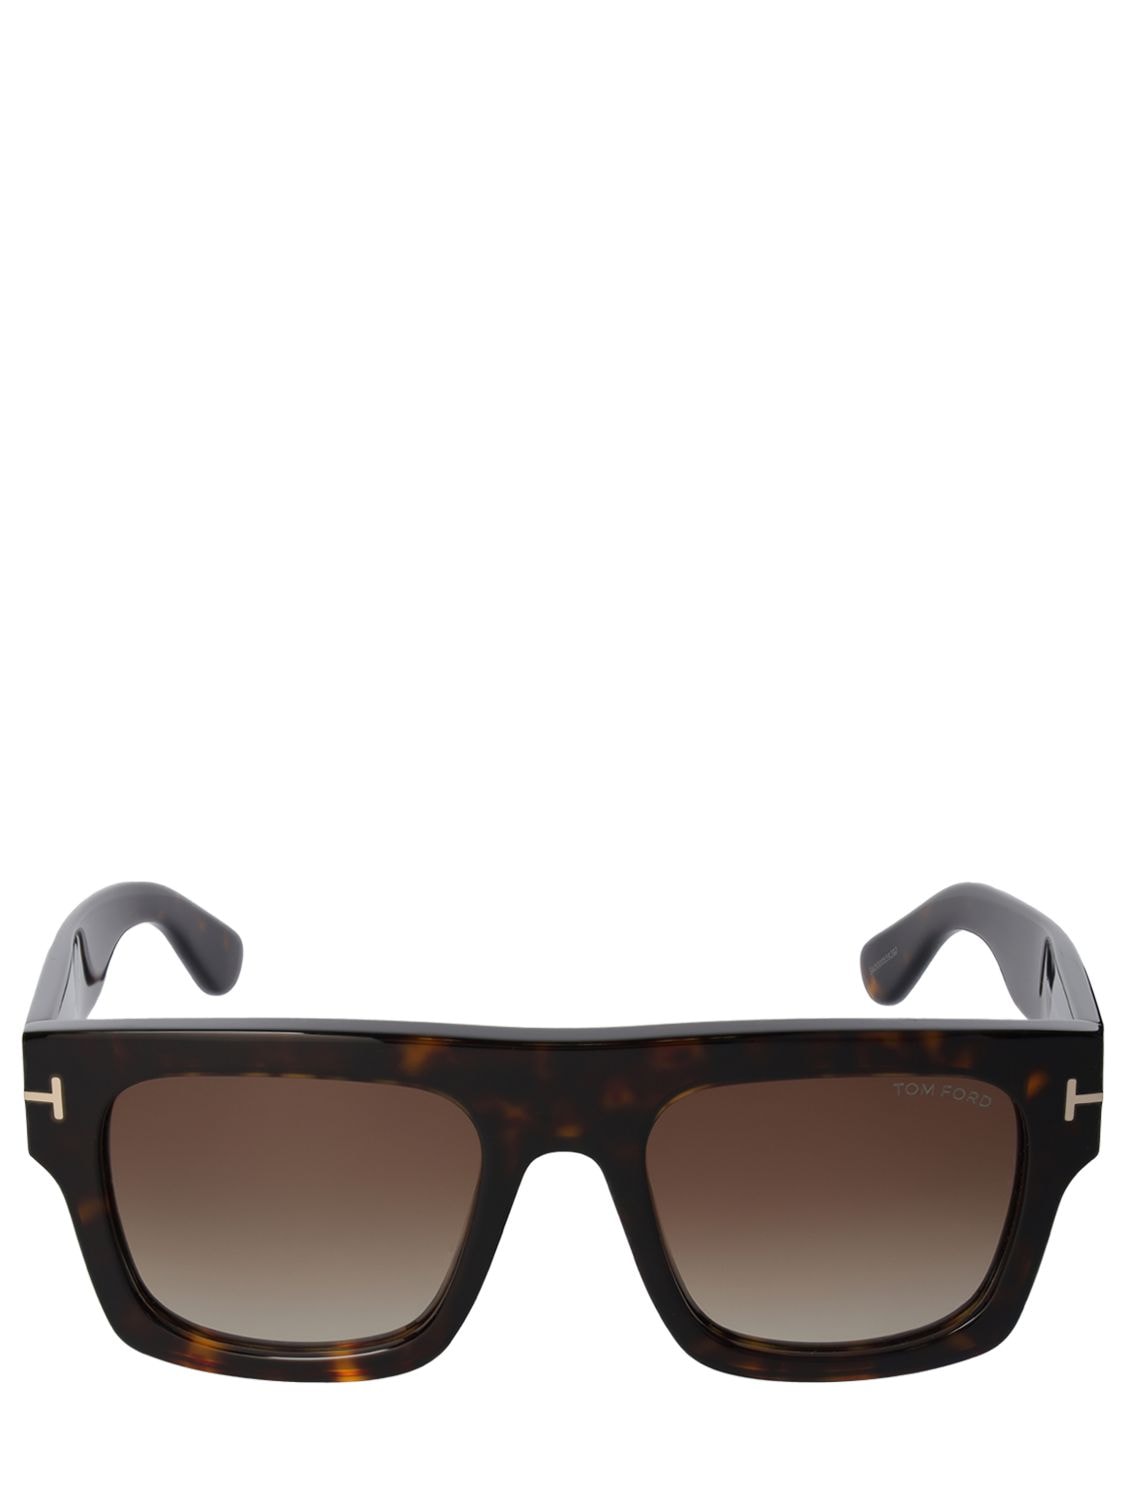 Tom Ford Fausto Squared Eco-acetate Sunglasses In Havana,brown | ModeSens